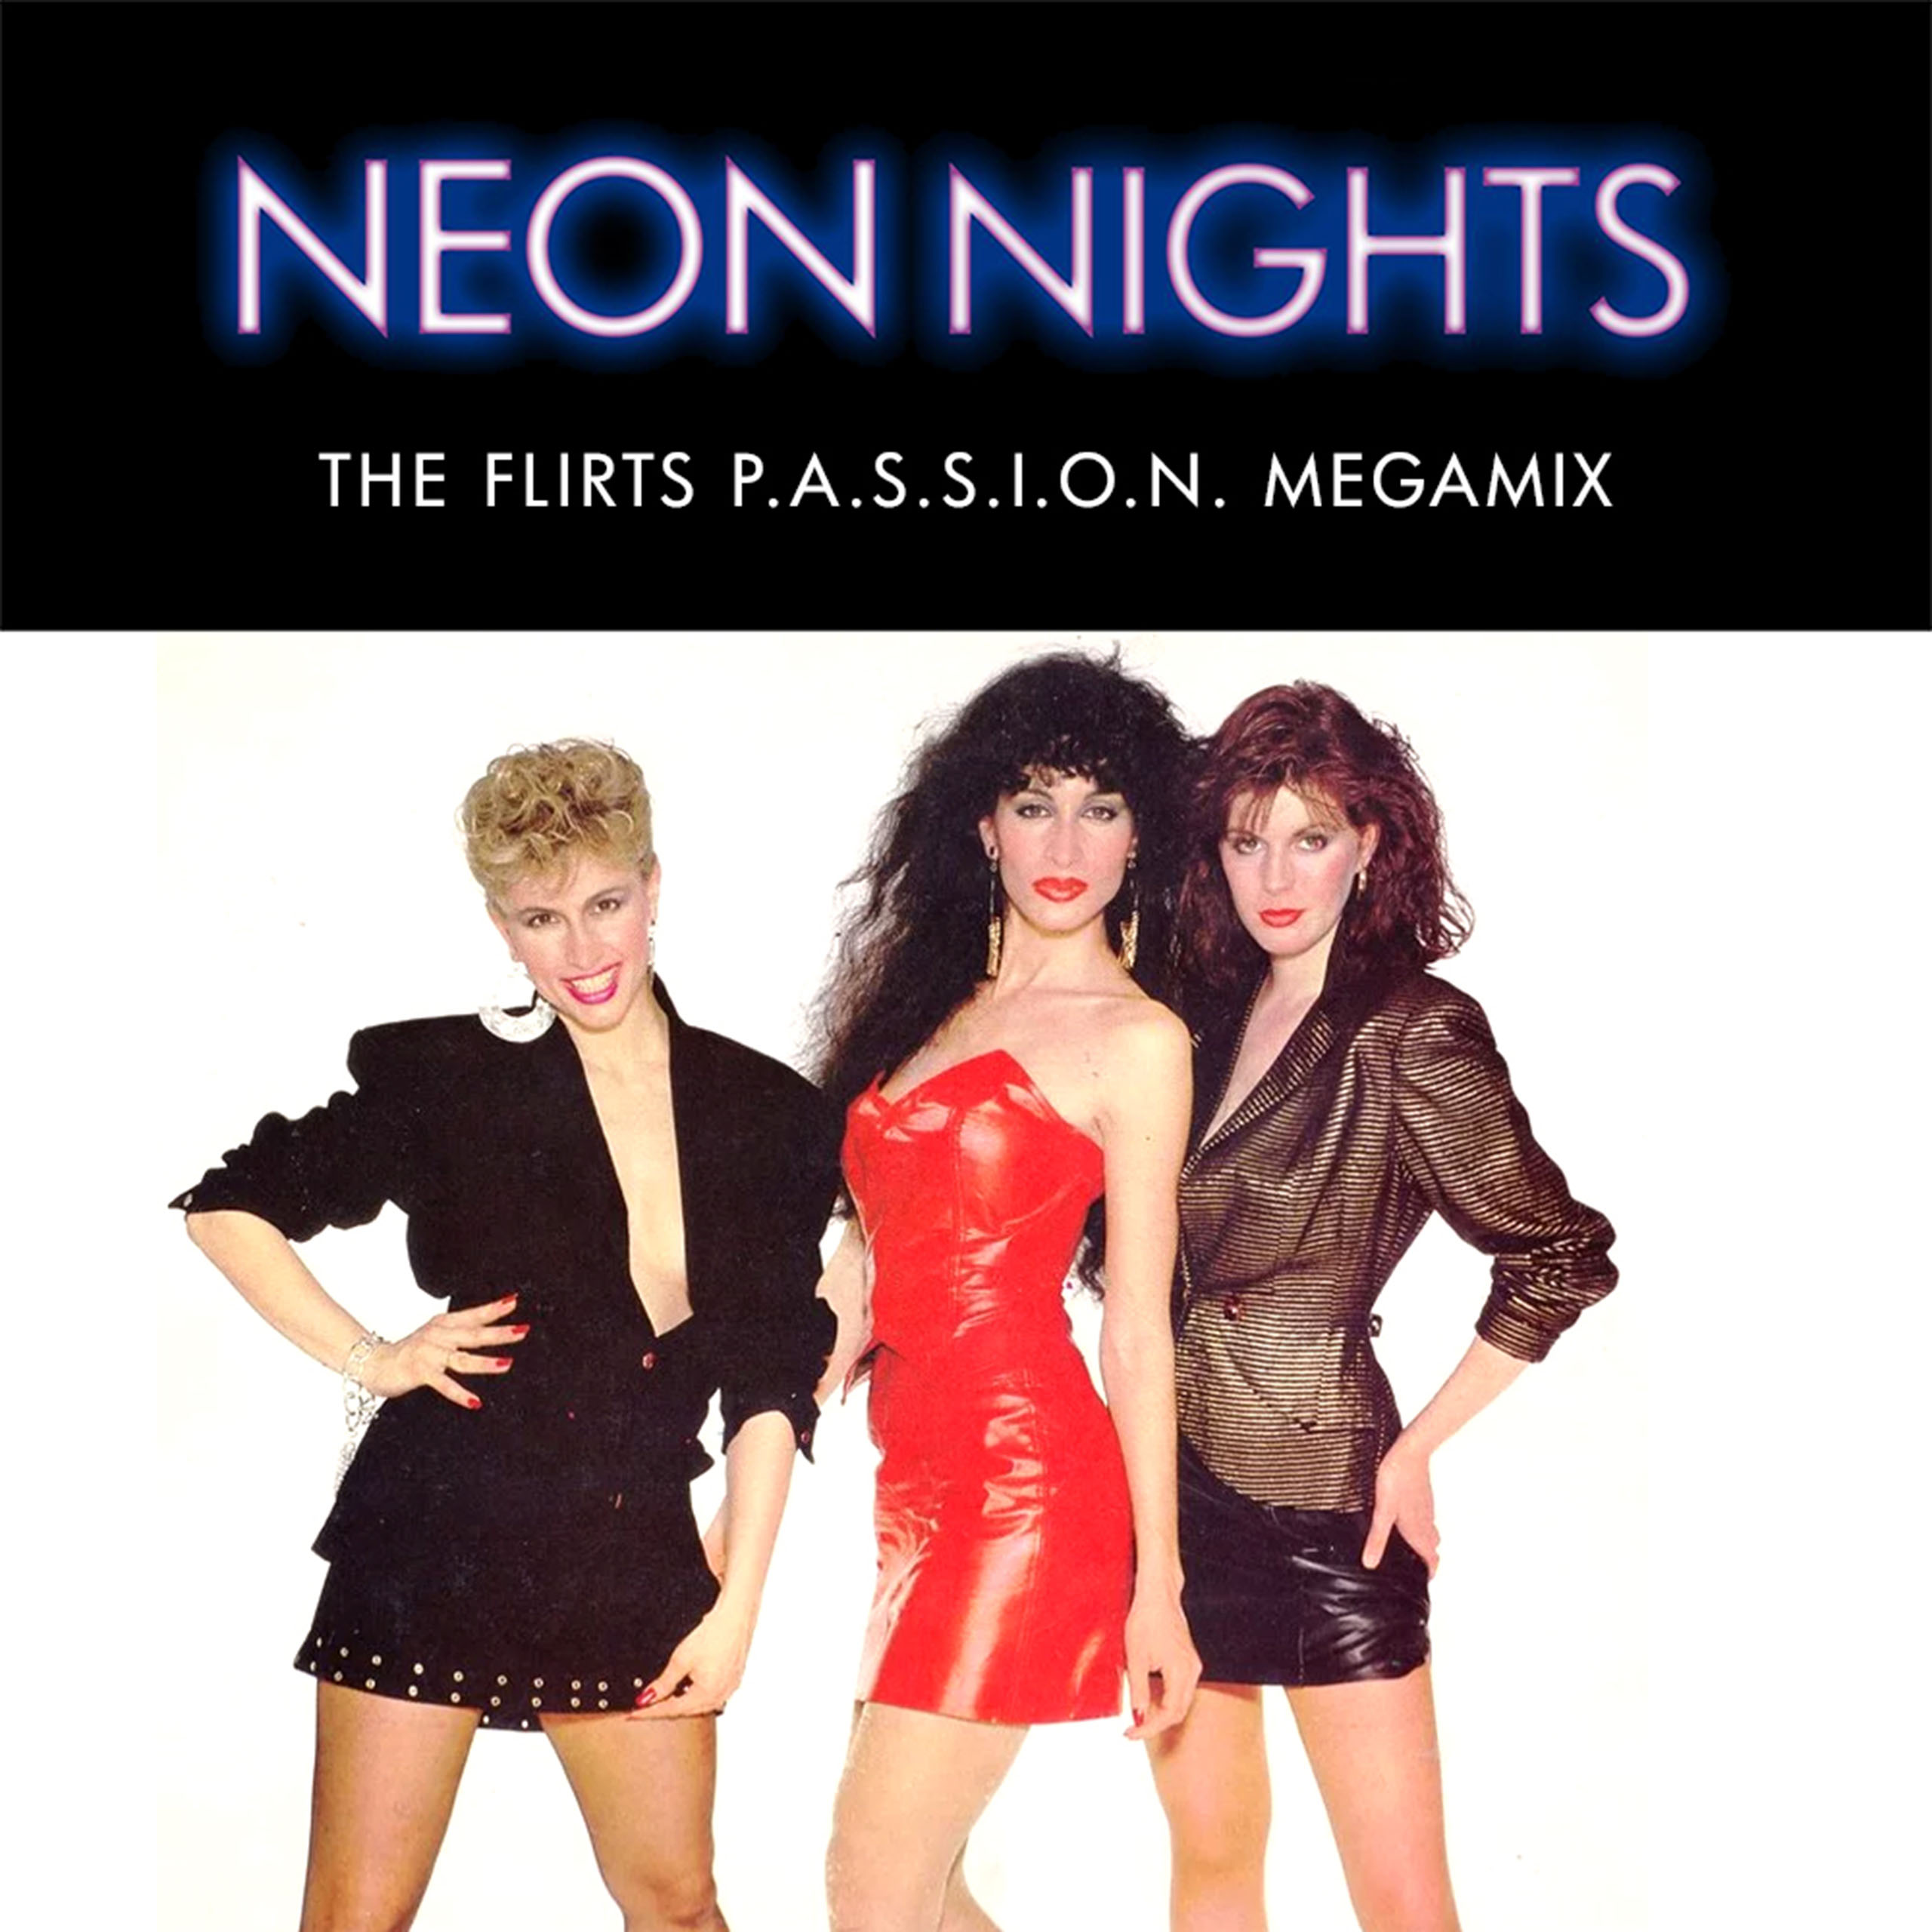 Show 611 – The Flirts P.A.S.S.I.O.N. Megamix